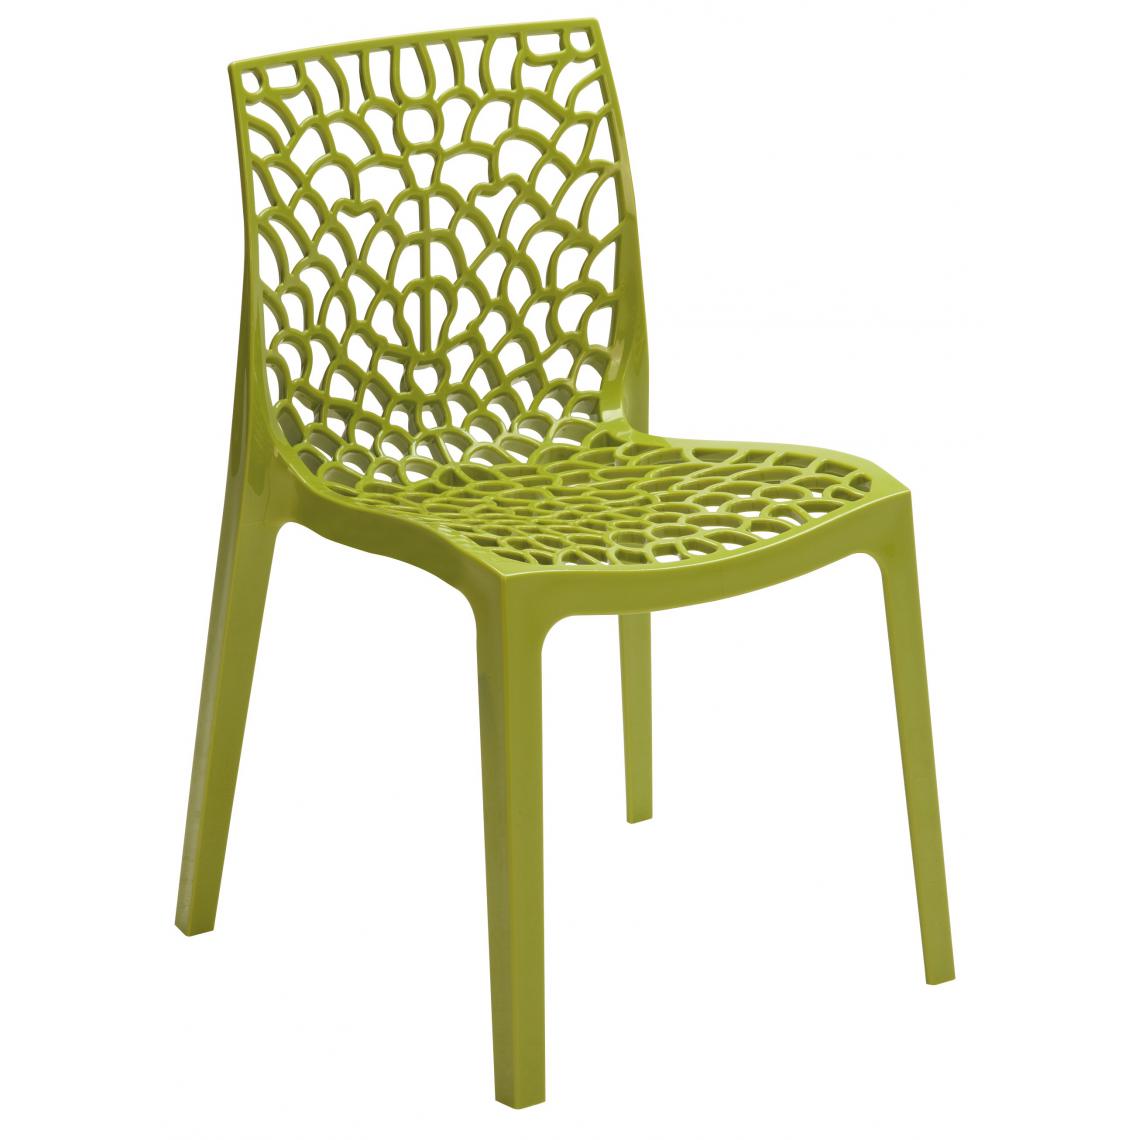 3S. x Home - Chaise Design Verte Anis GRUYER - Chaises